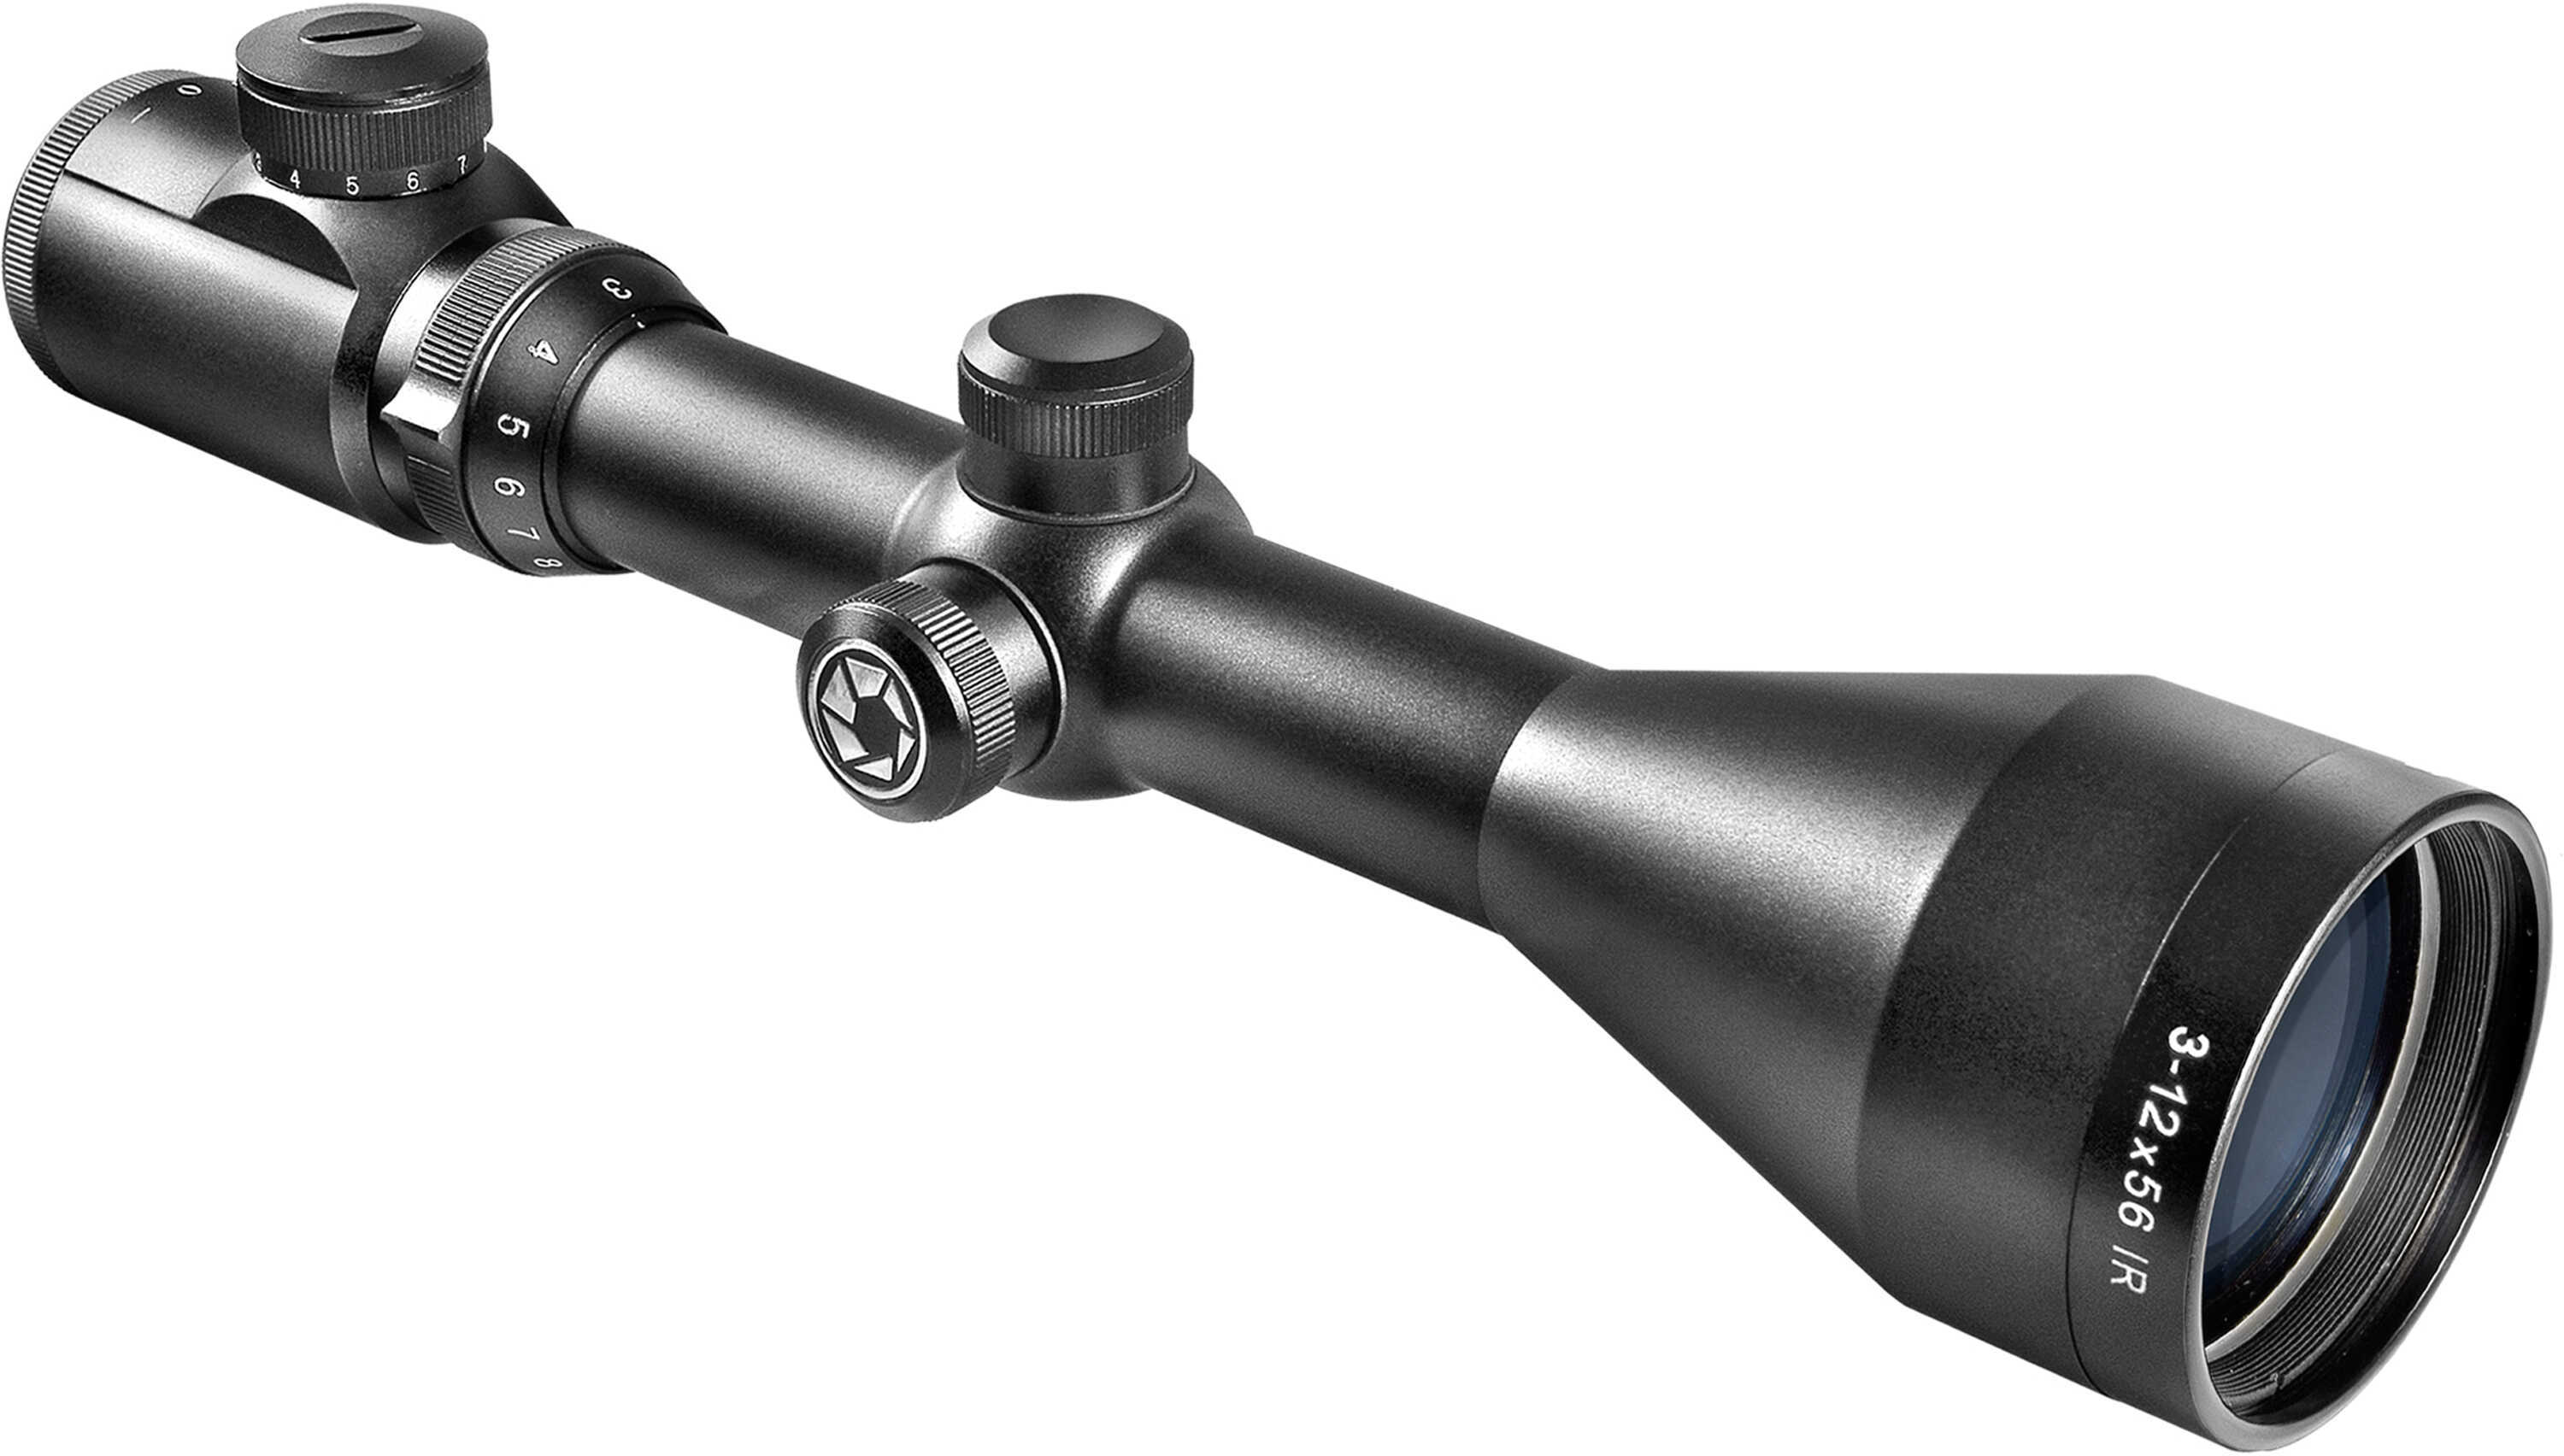 Barska EURO-30 Pro Rifle Scope 3-12X Magnification 56MMObjective 4A Illuminated Cross Reticle Matte Finish 30mm Tube 0.2